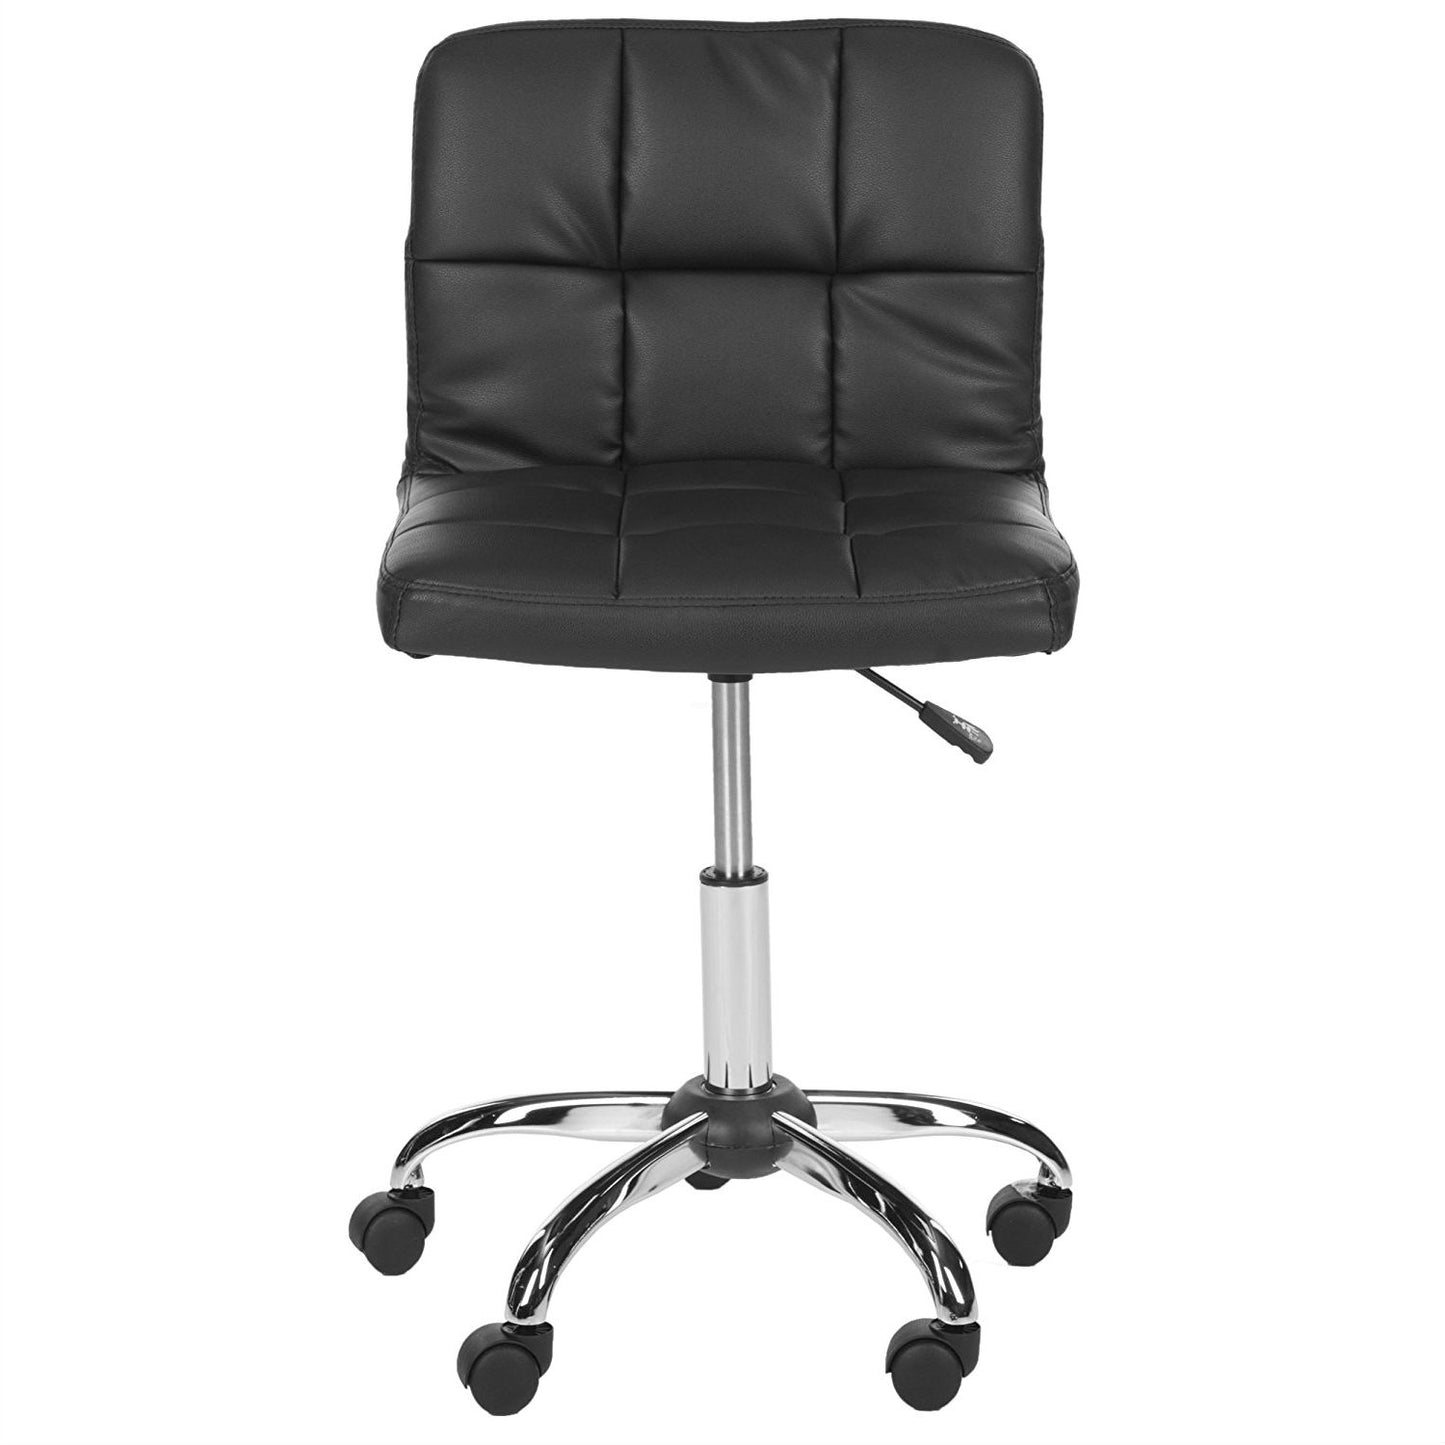 Modern Black Faux Leather Cushion Home Office Desk Chair